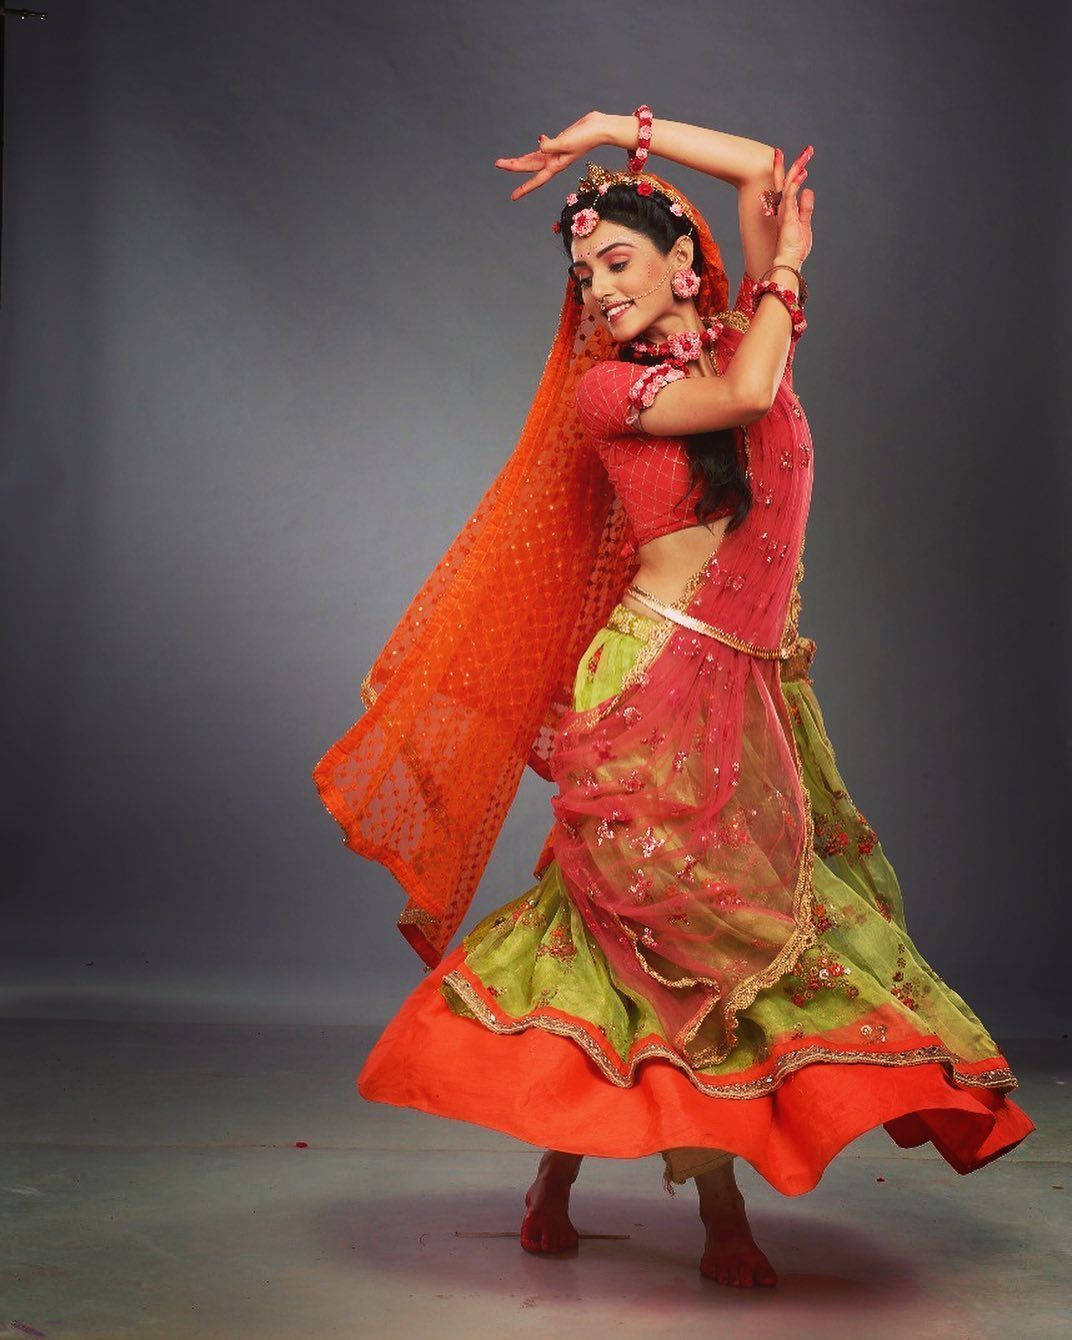 Mallika Singh Red Dress Dancing Background